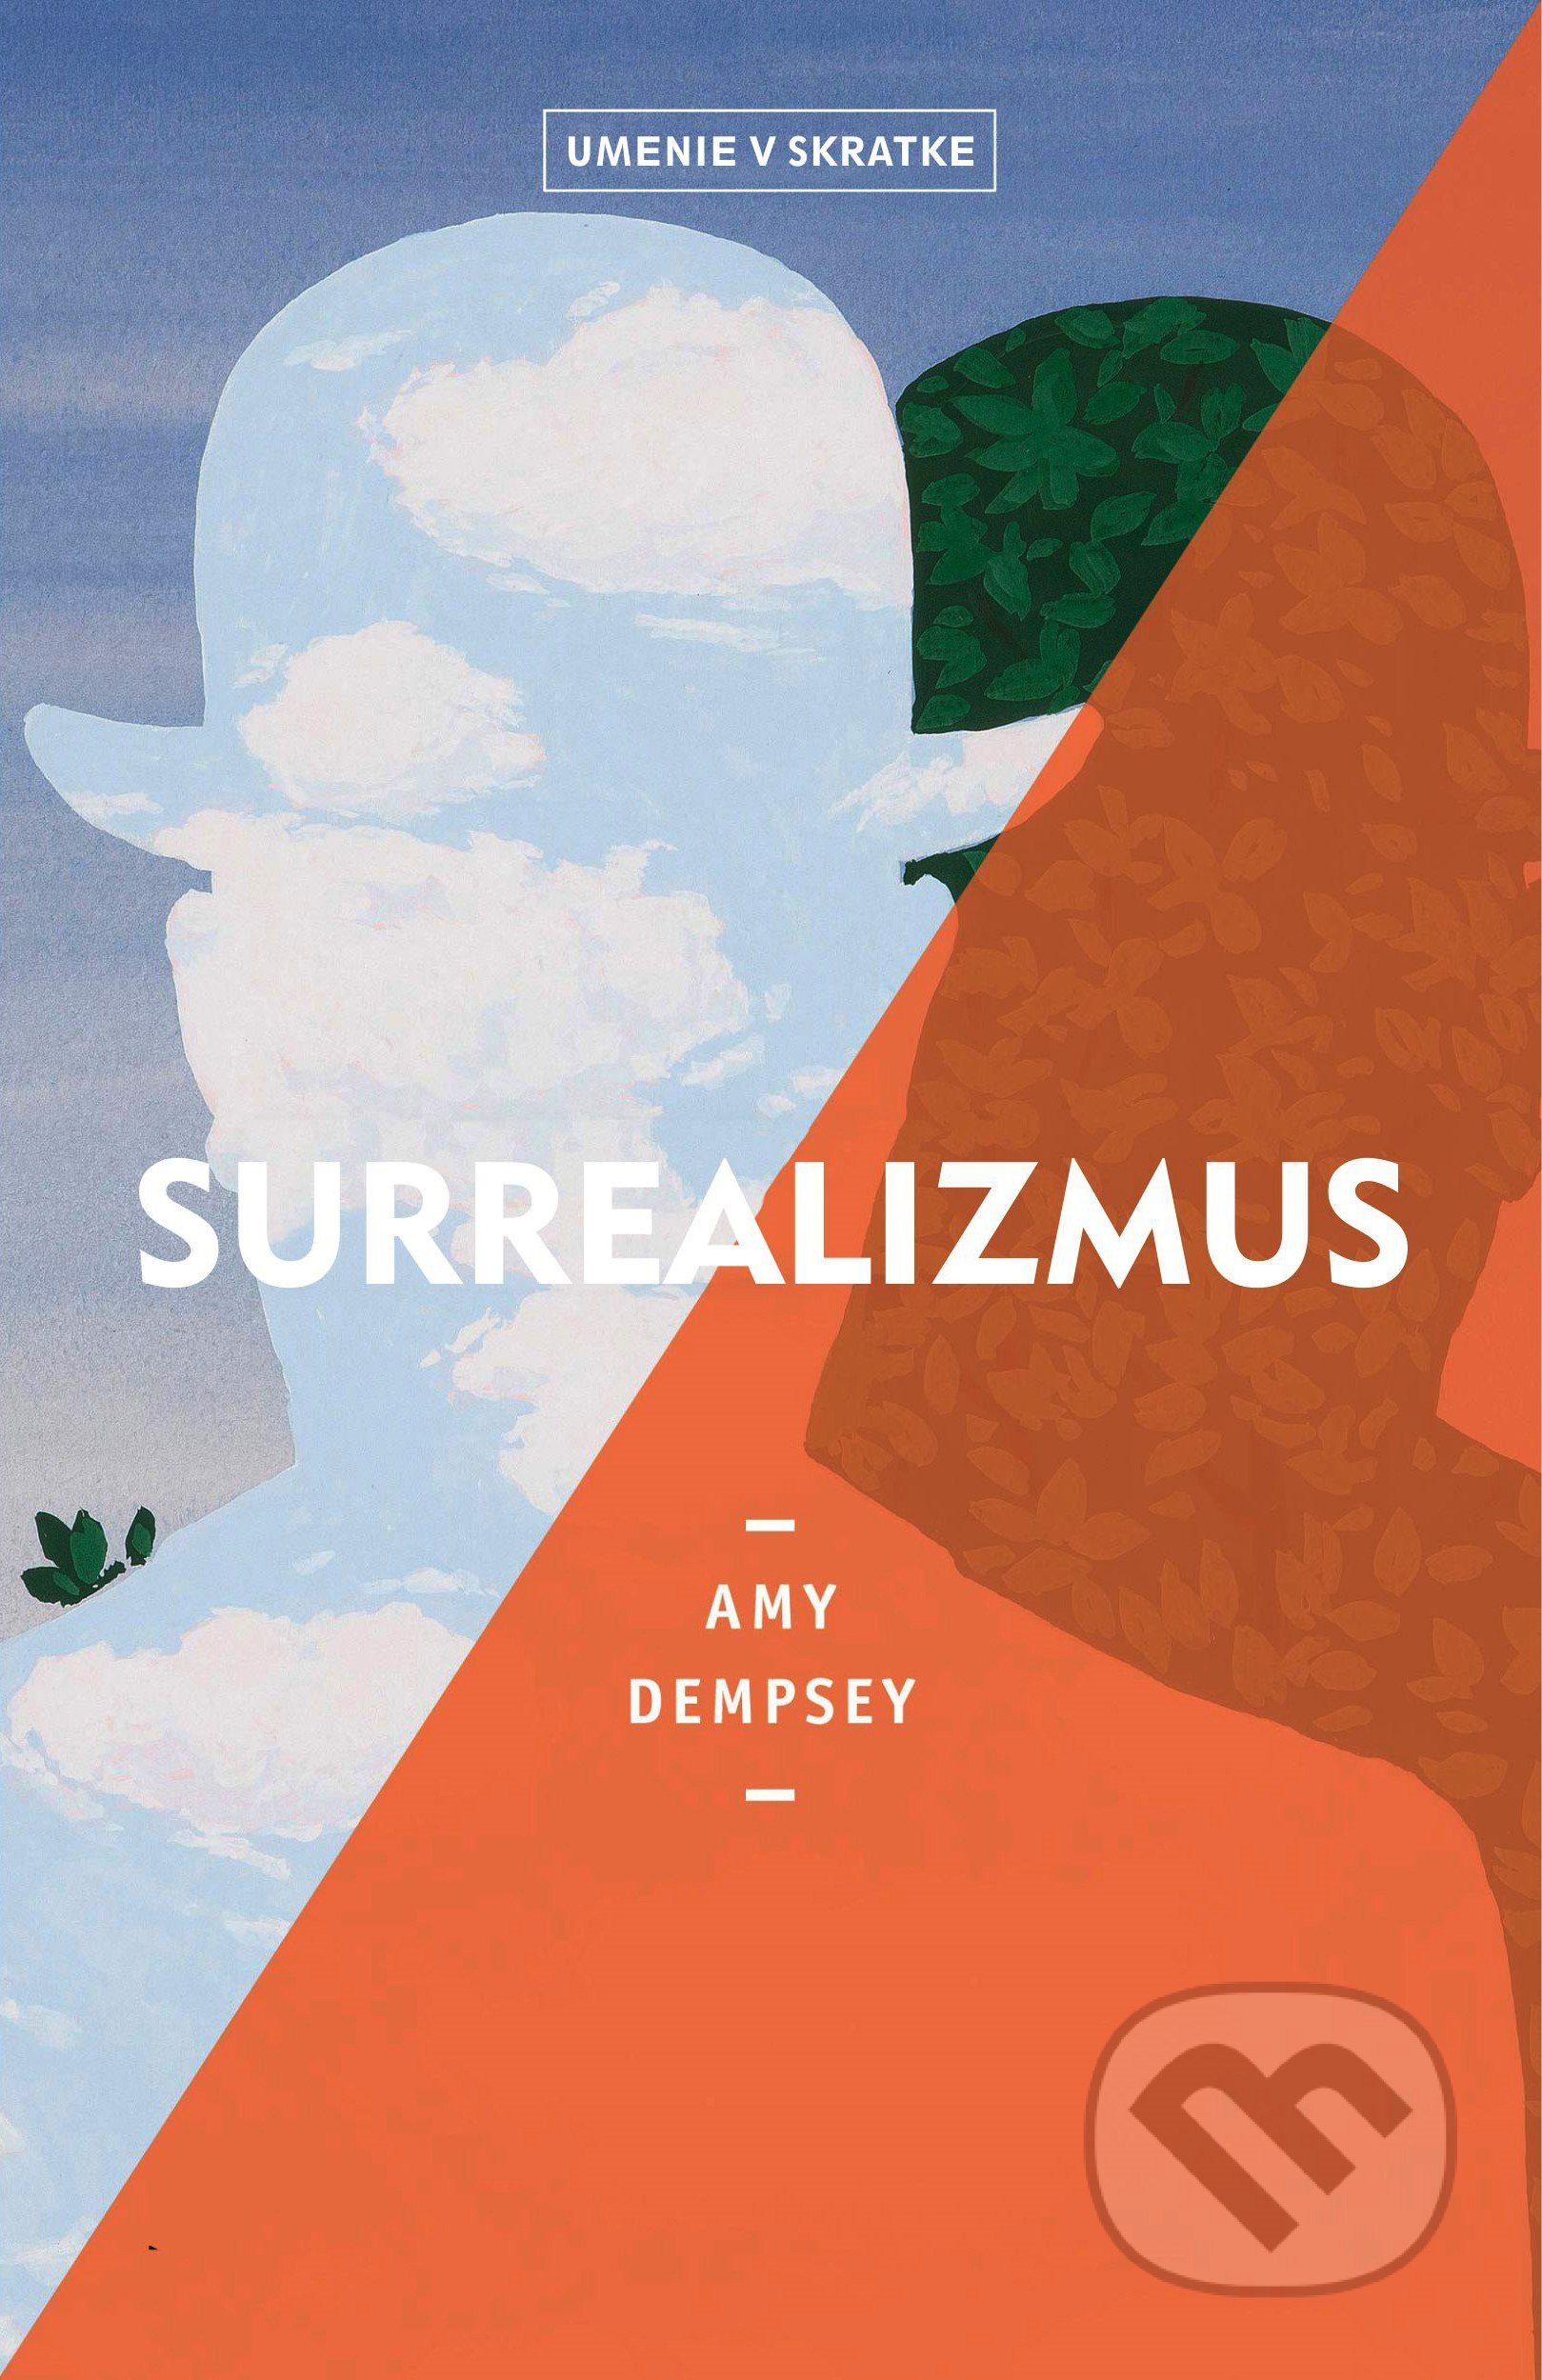 Surrealizmus - Amy Dempsey, Slovart, 2020